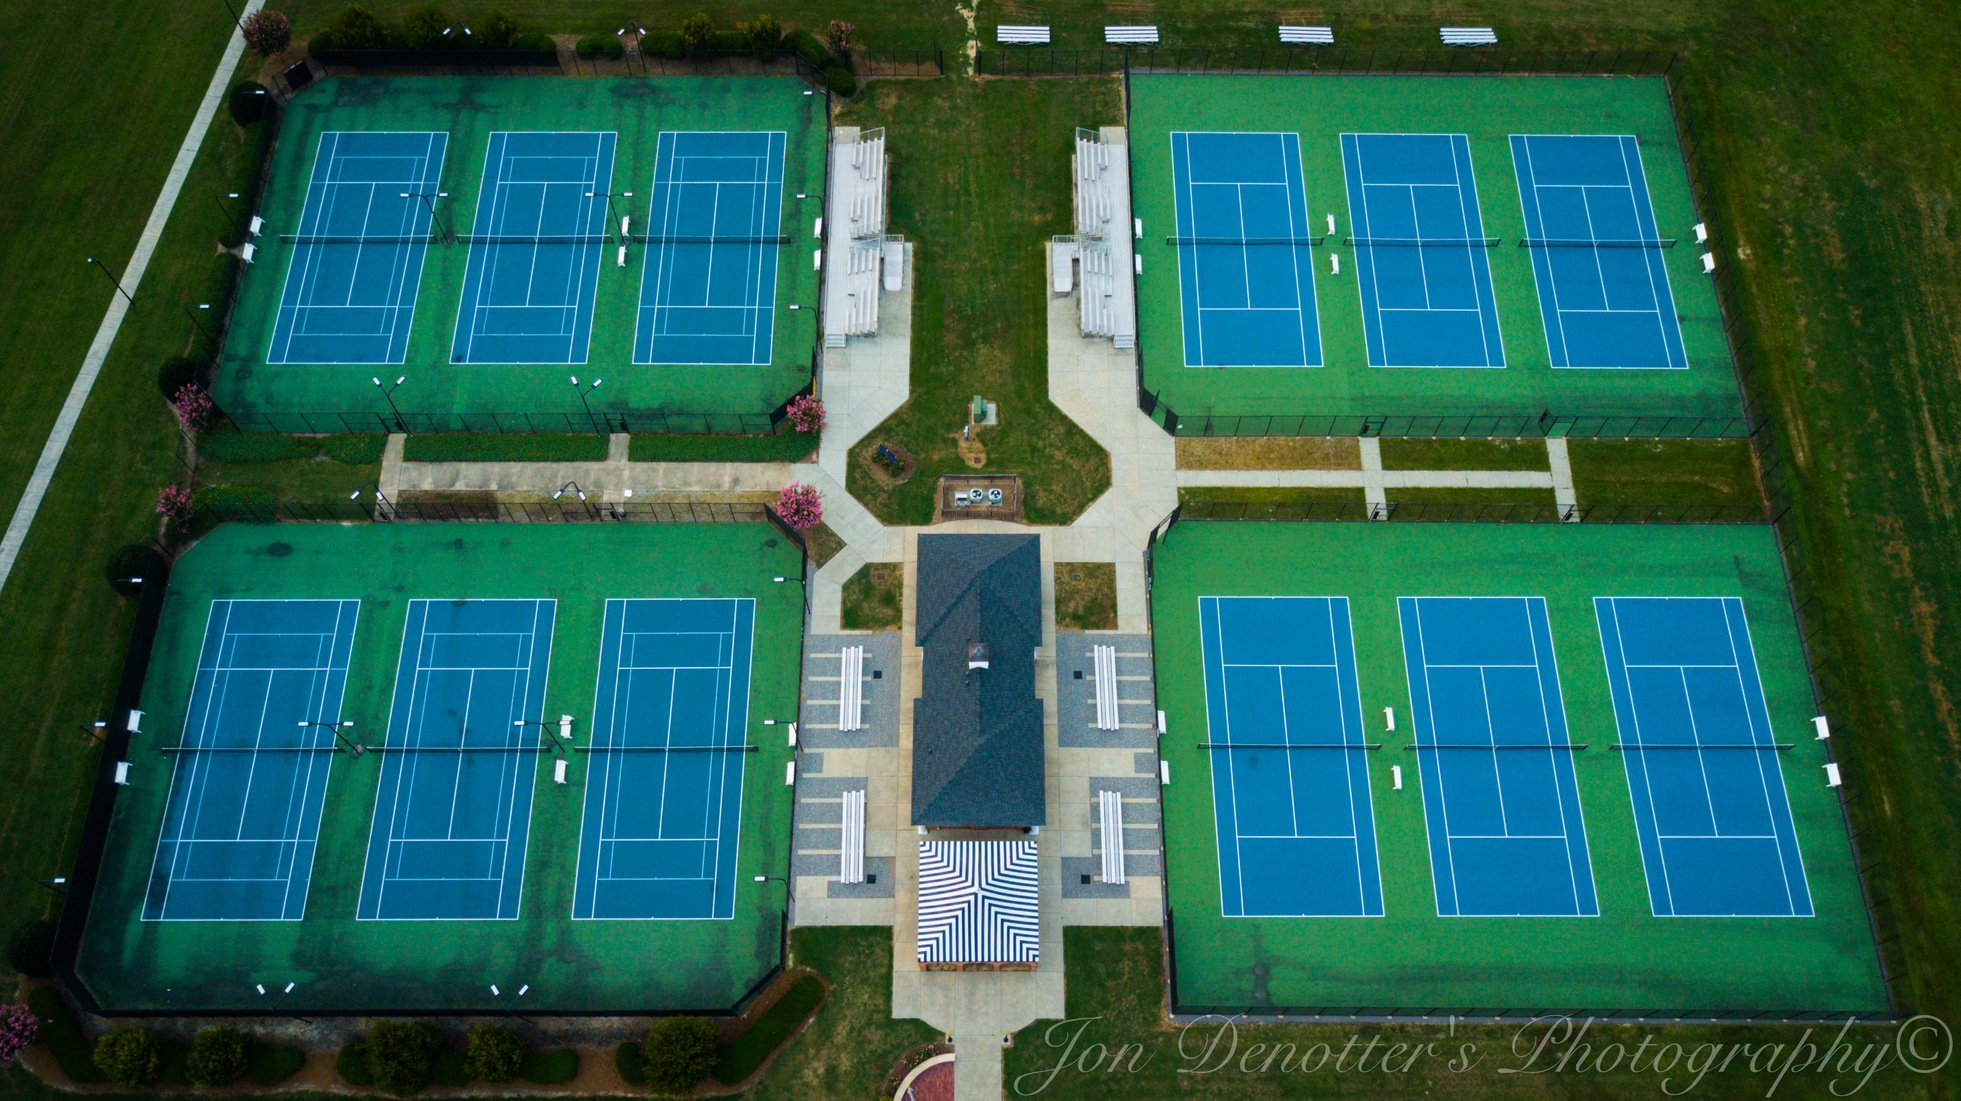 Slick Family Foundation Tennis Center | Vietnam Memorial Courts & Betts Pavilion